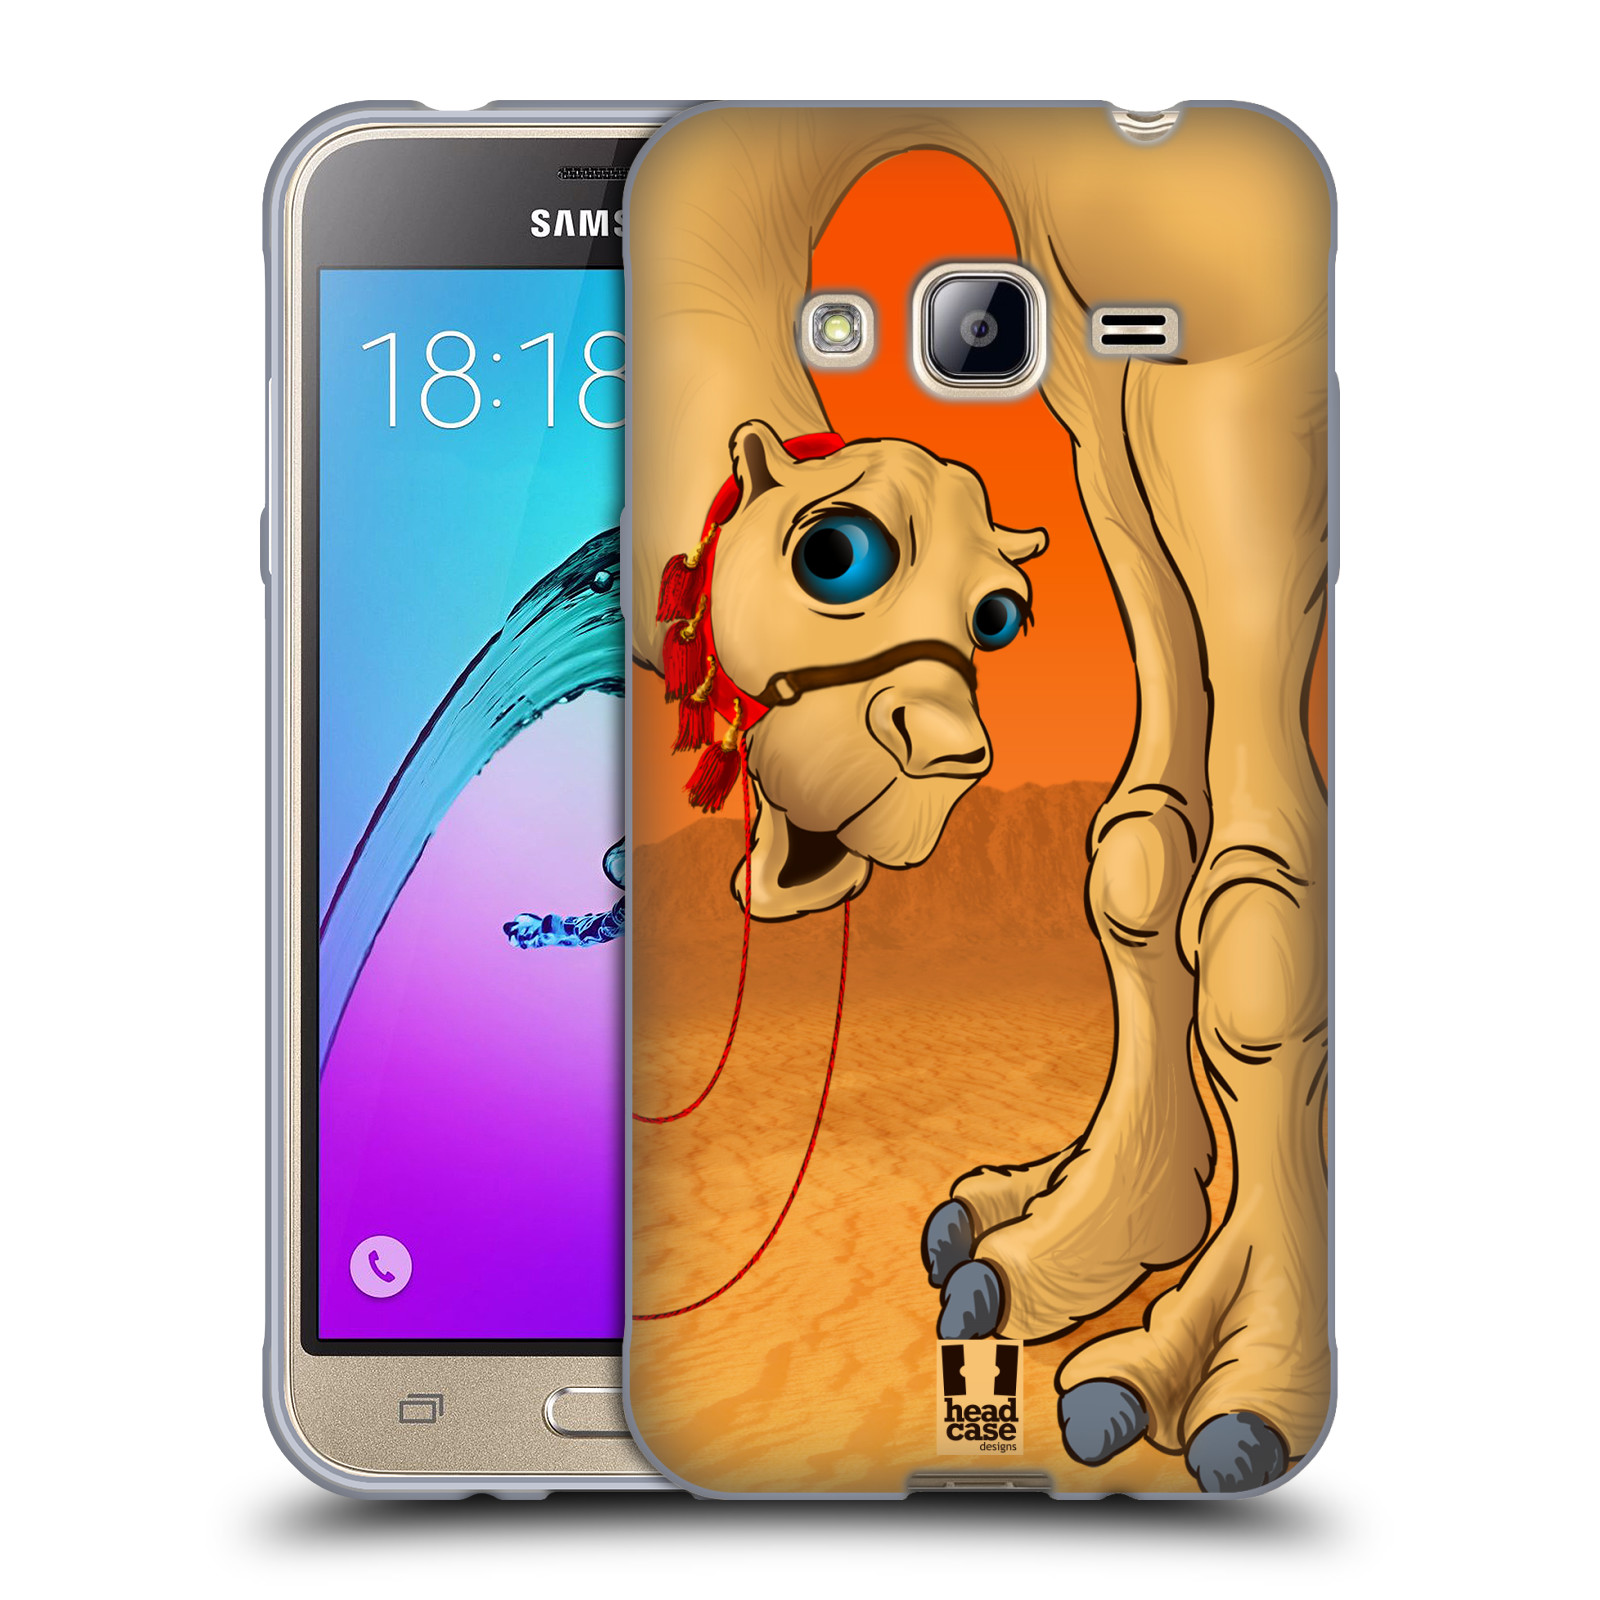 HEAD CASE silikonový obal na mobil Samsung Galaxy J3, J3 2016 vzor dlouhé nohy kreslená velbloud